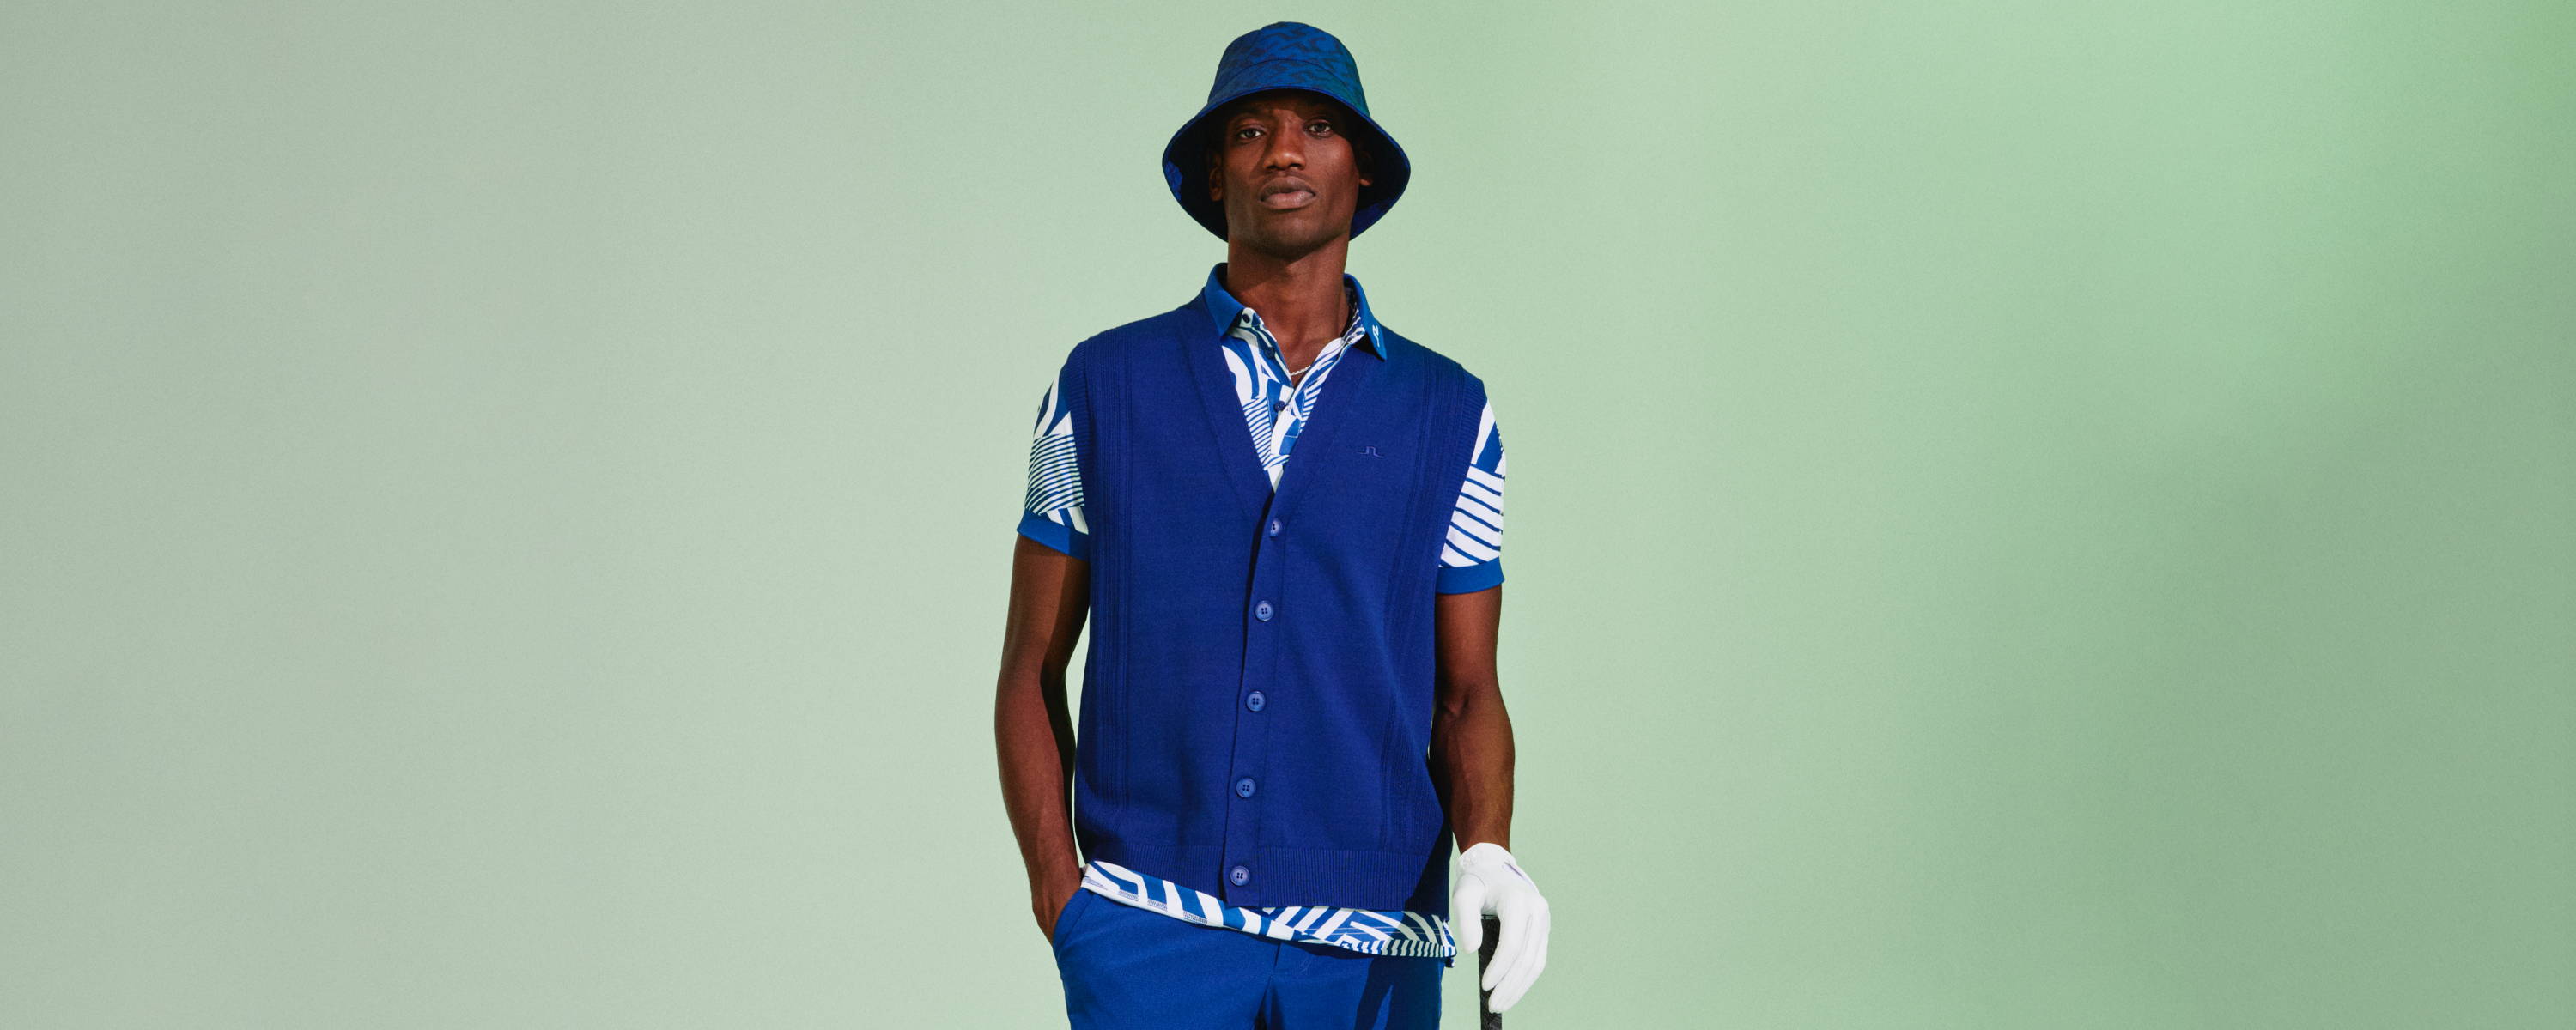 J.Lindeberg Golf Clothing HS24